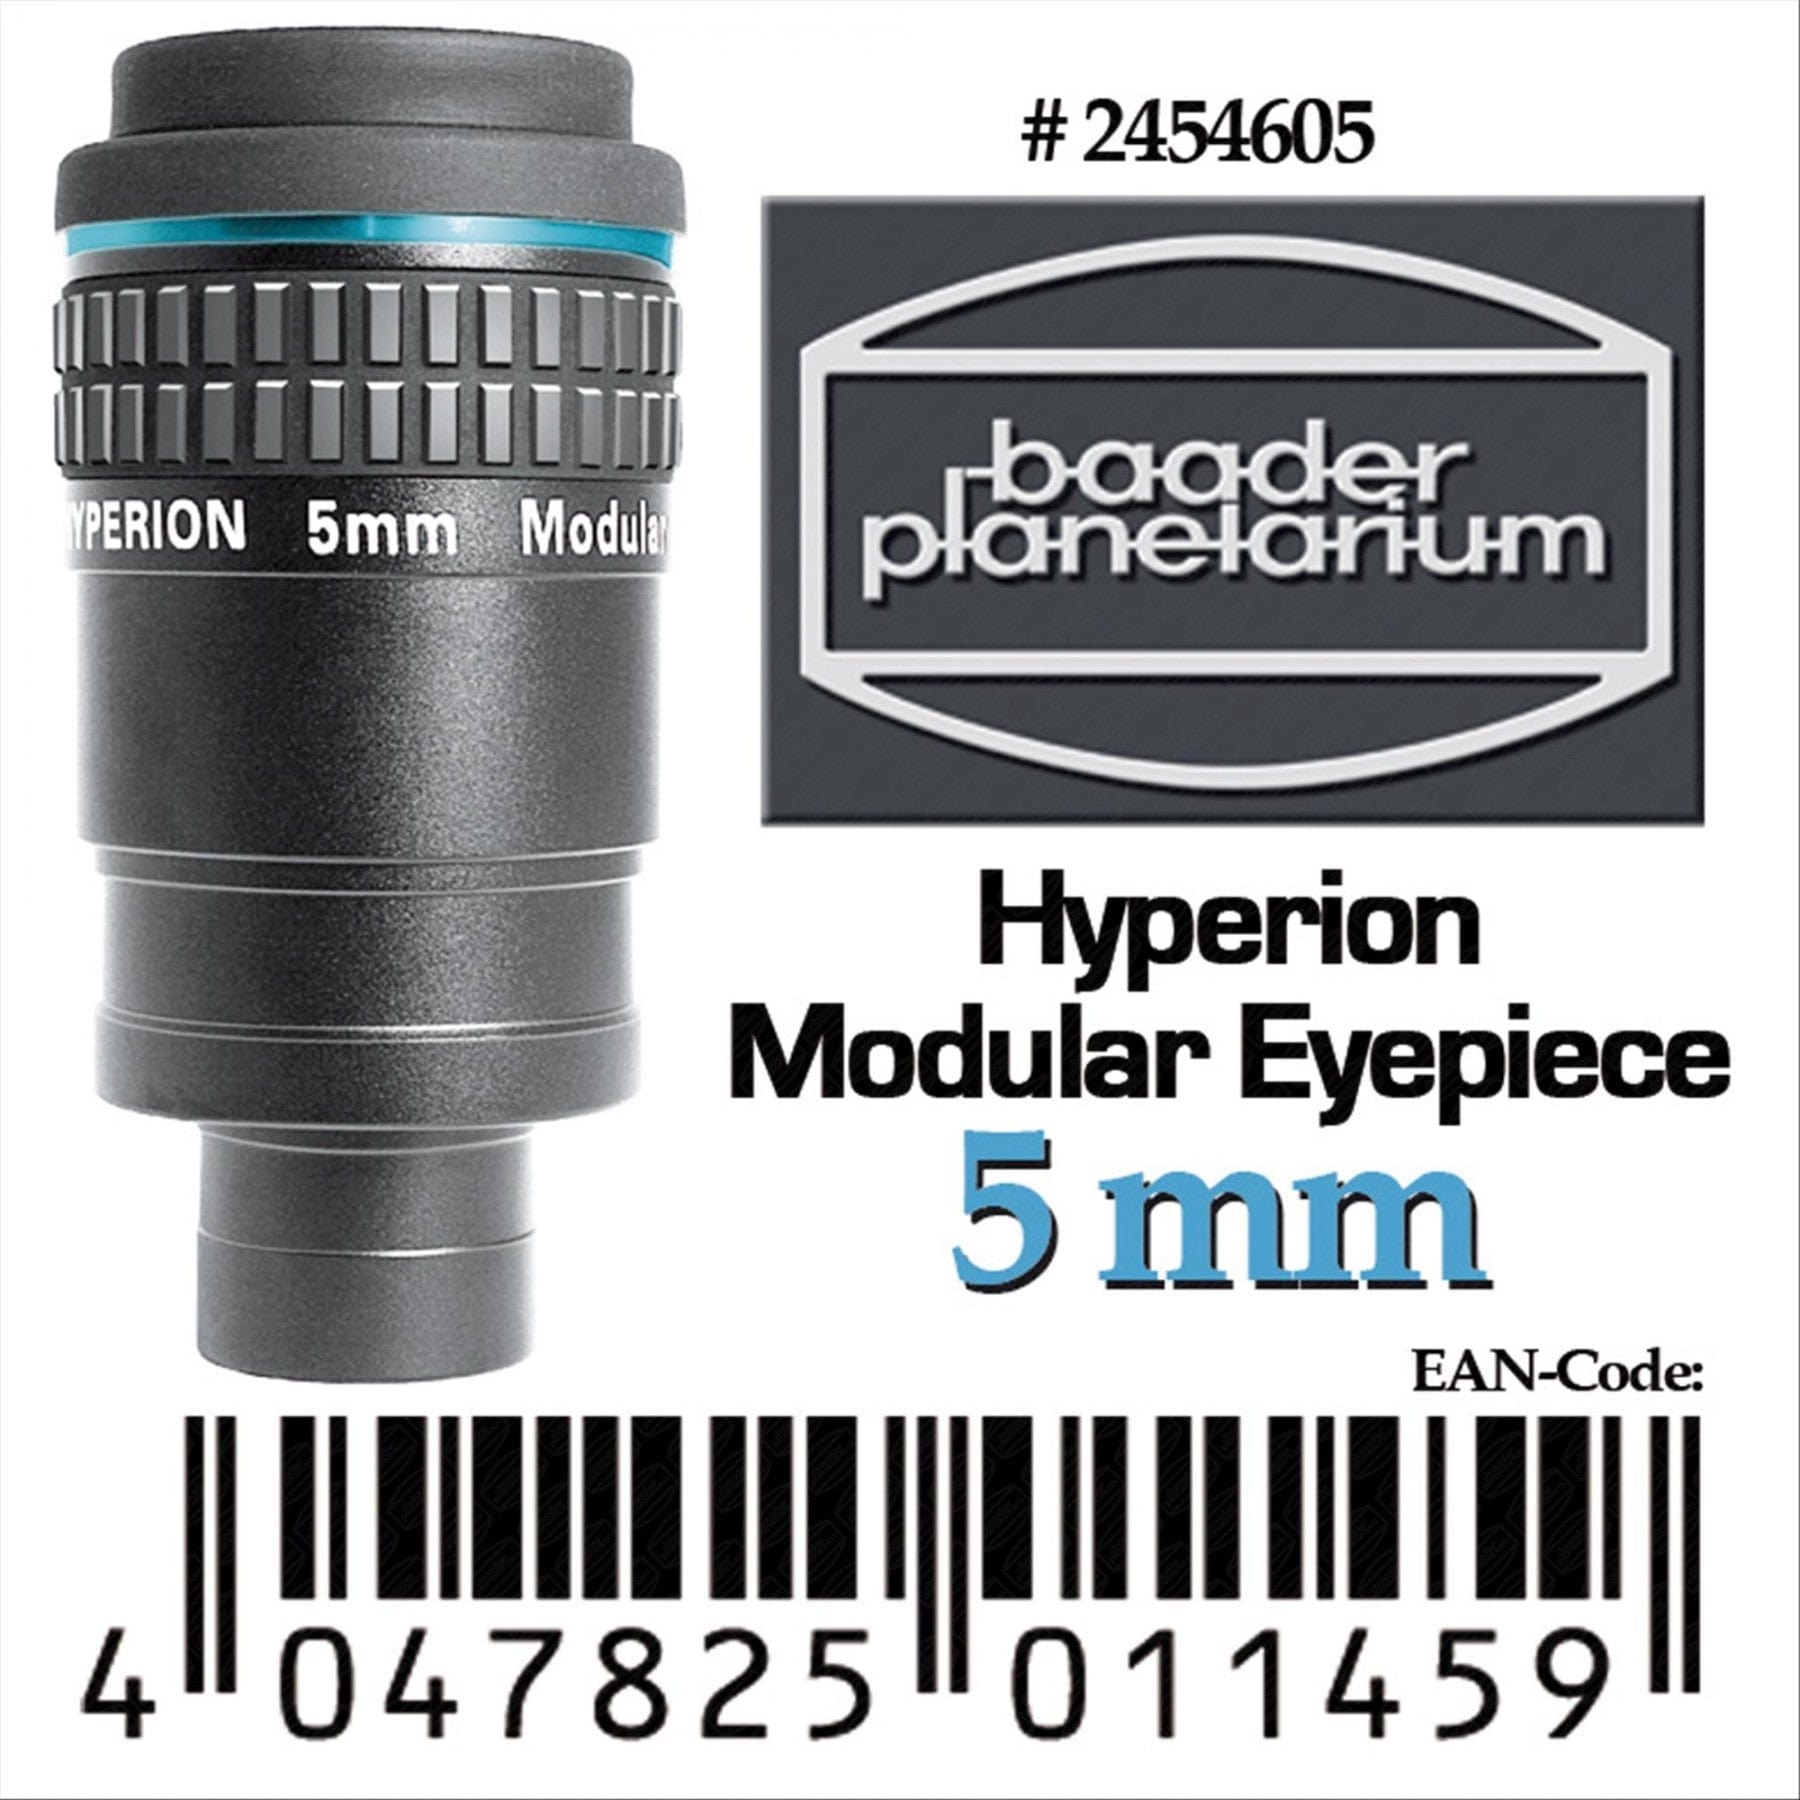 Baader Planetarium Eyepiece Baader Hyperion 5mm 68 Degree Modular Eyepiece - 2454605